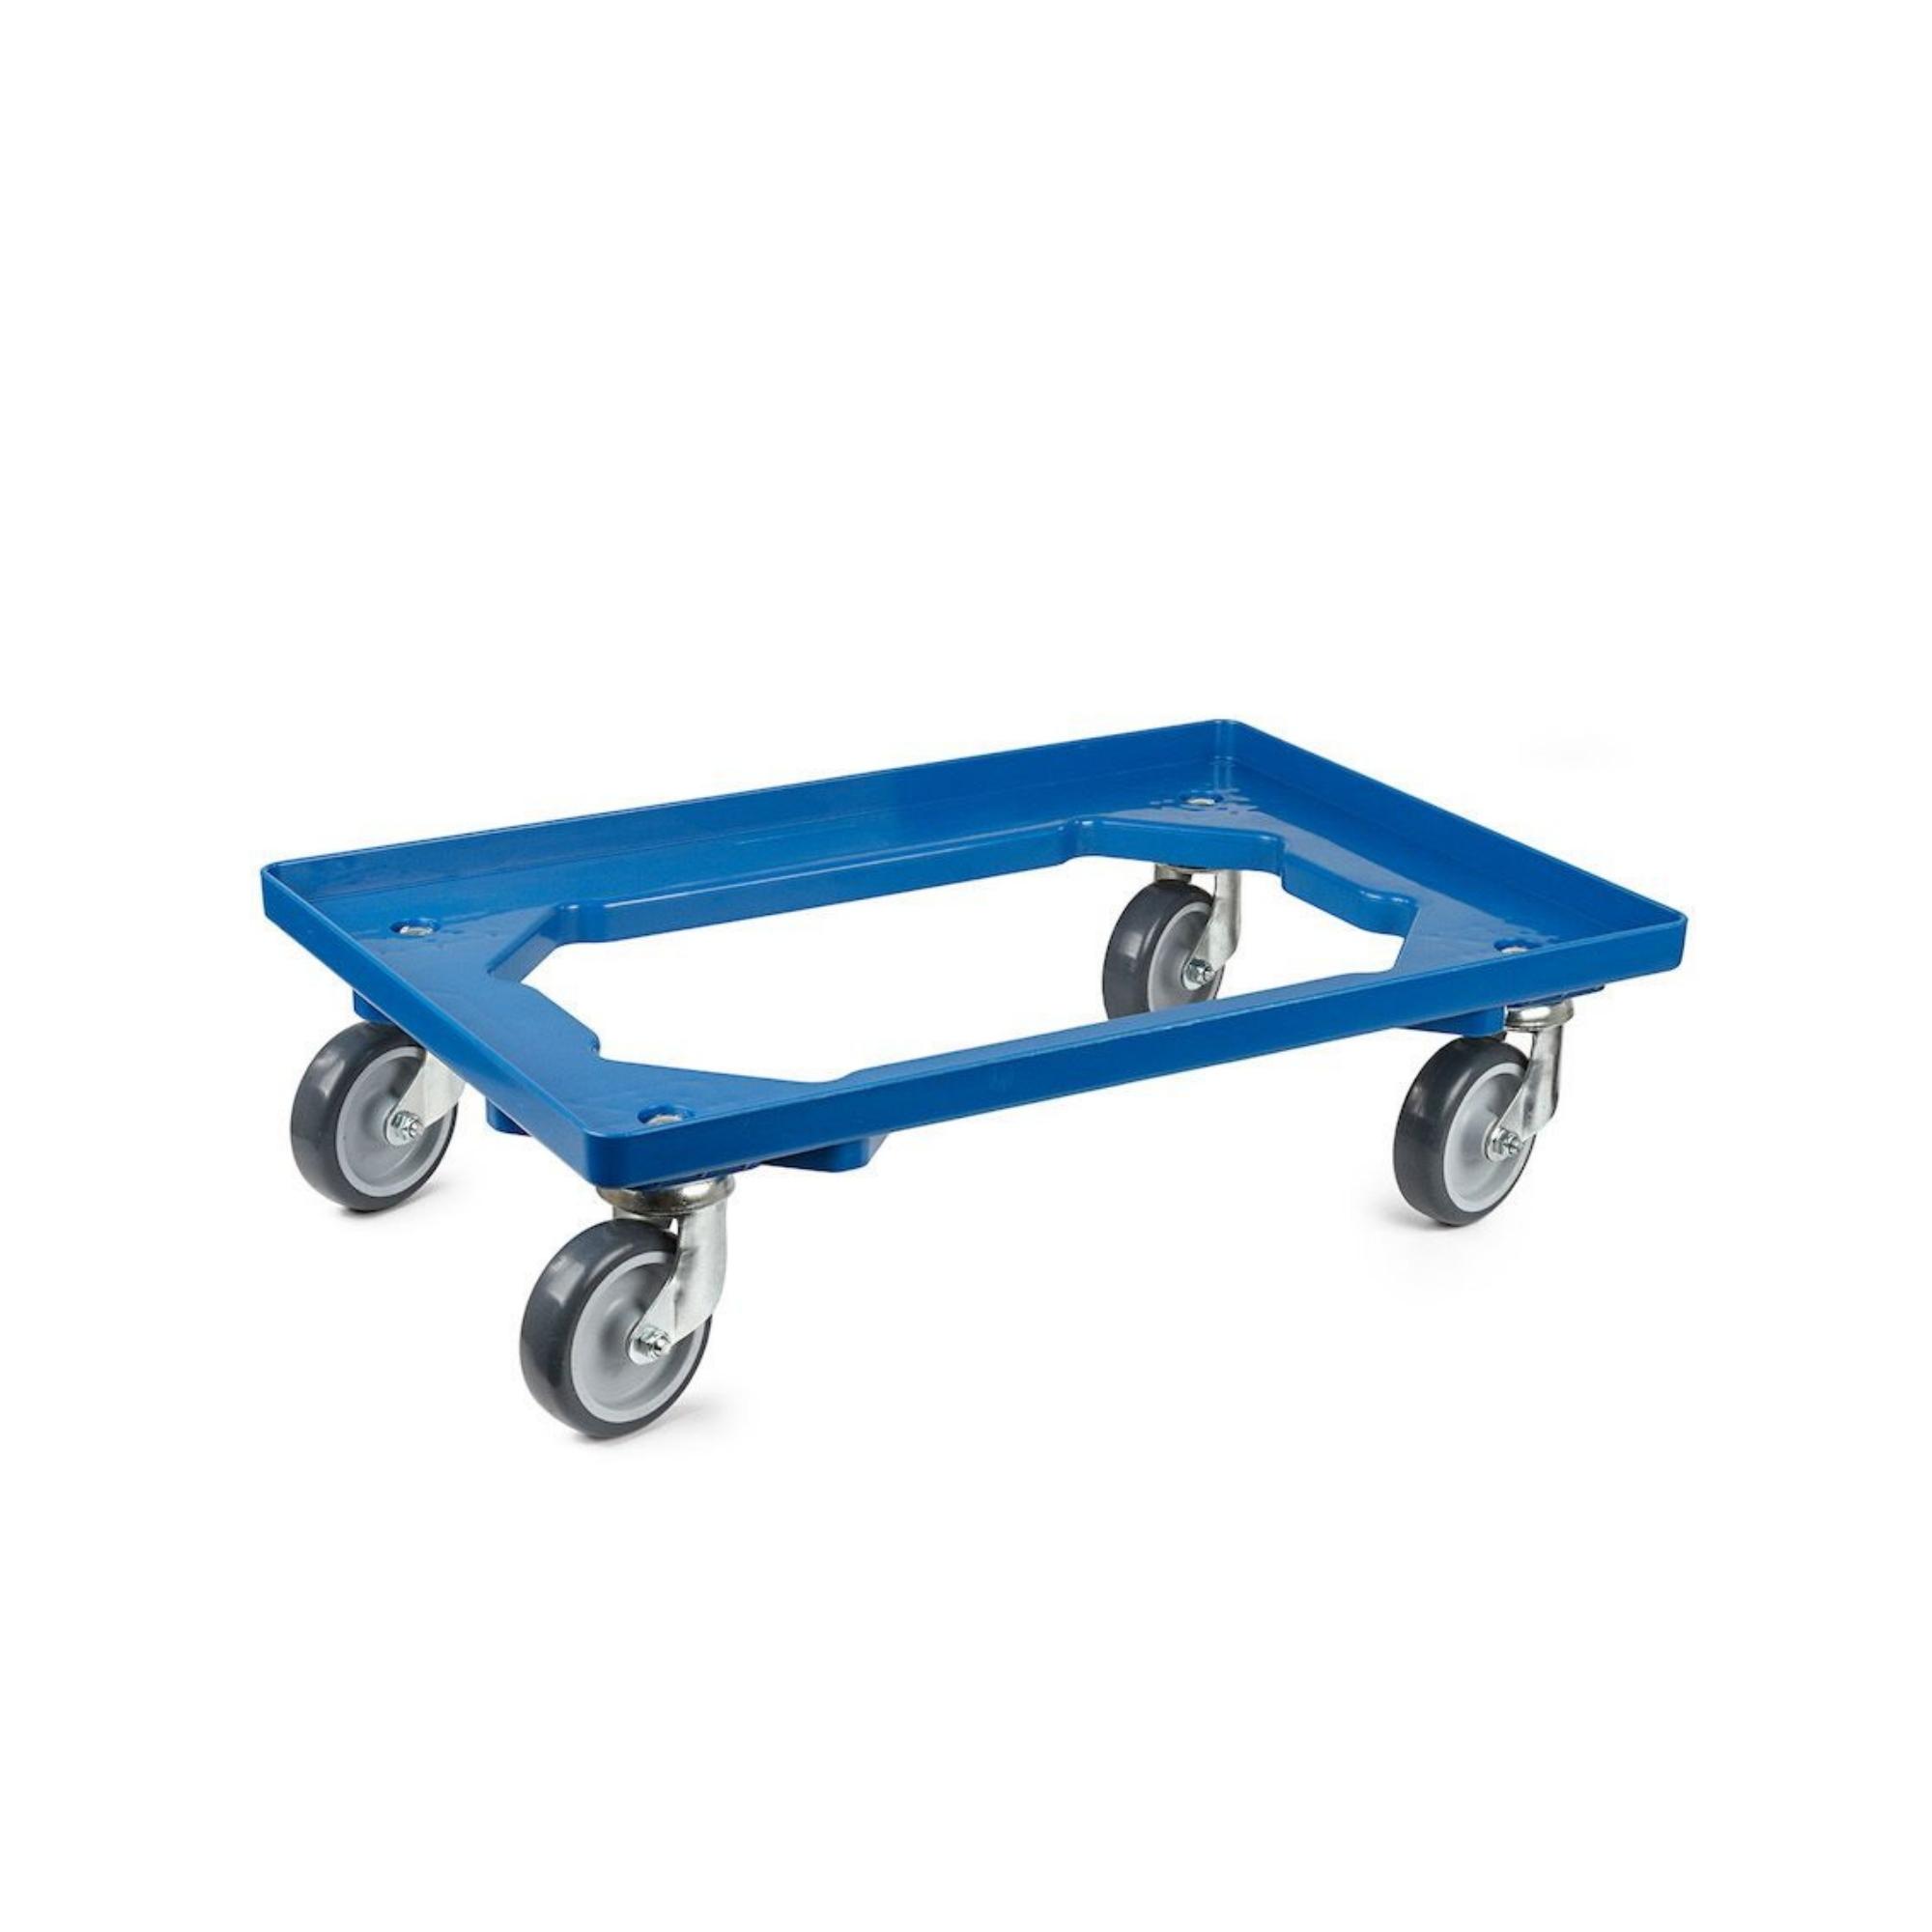 Transportroller für Euroboxen 60x40cm mit Gummiräder blau | Offenes Deck | 4 Lenkrollen | Traglast 300kg | Kistenroller Logistikroller Rollwagen Profi-Fahrgestell